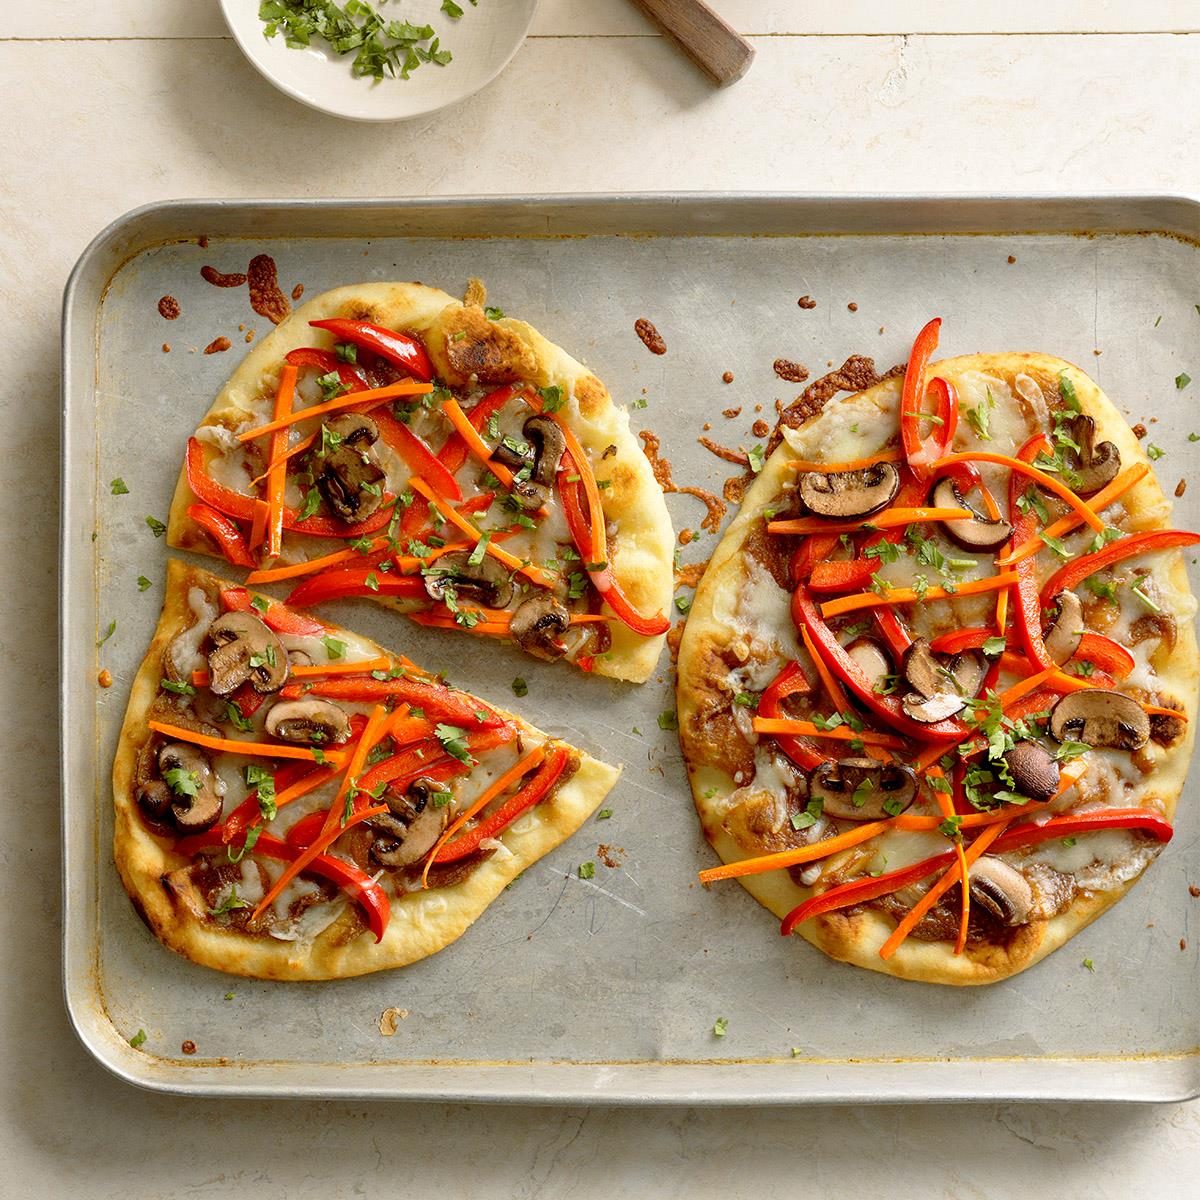 15 Delicious Homemade Pizza Recipes Everyone Will Devour